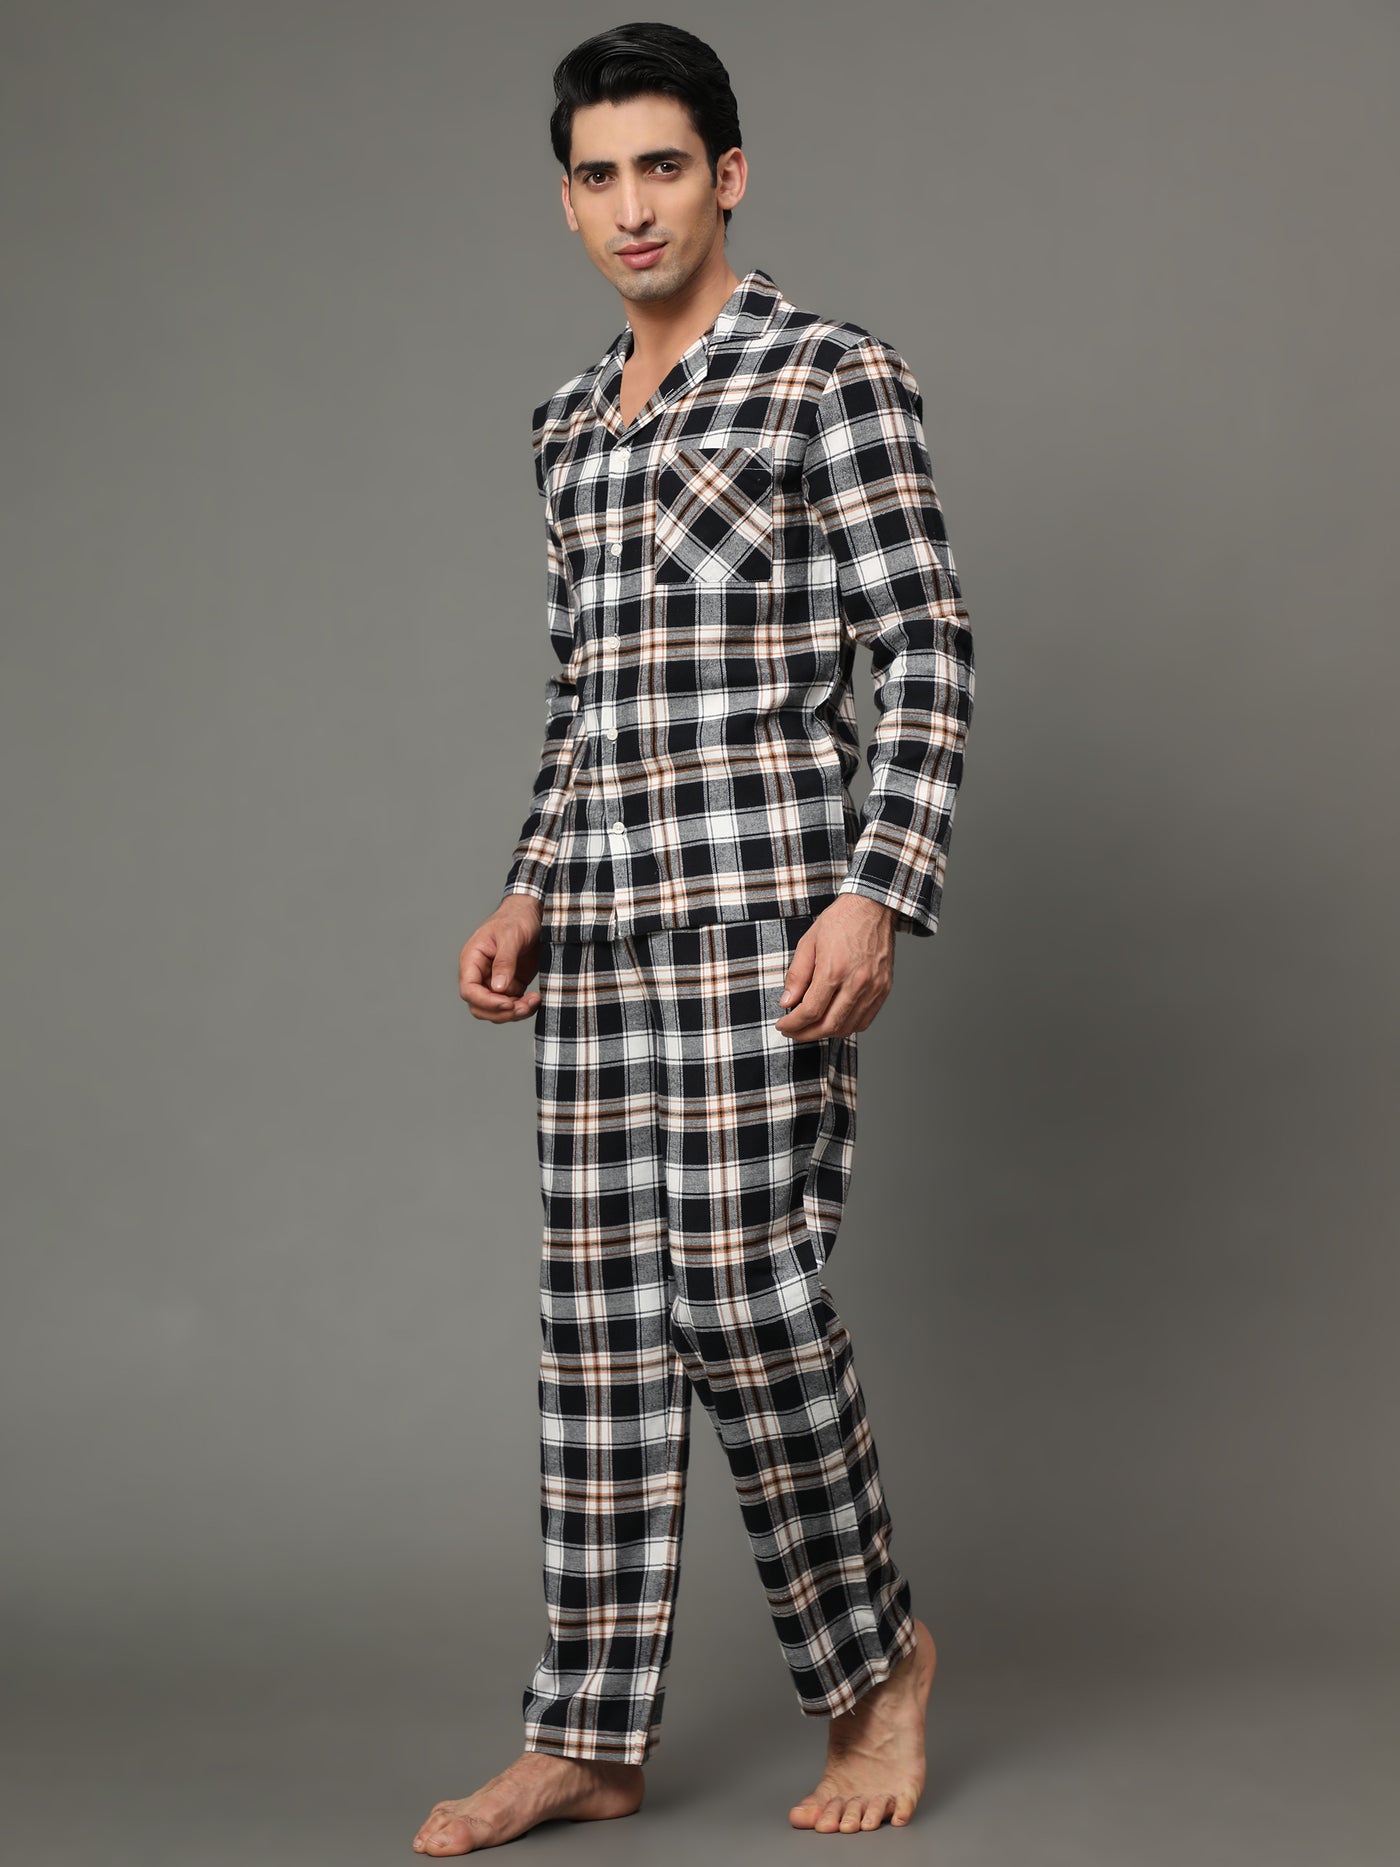 Pyjama Set for Men-Black & White Checked